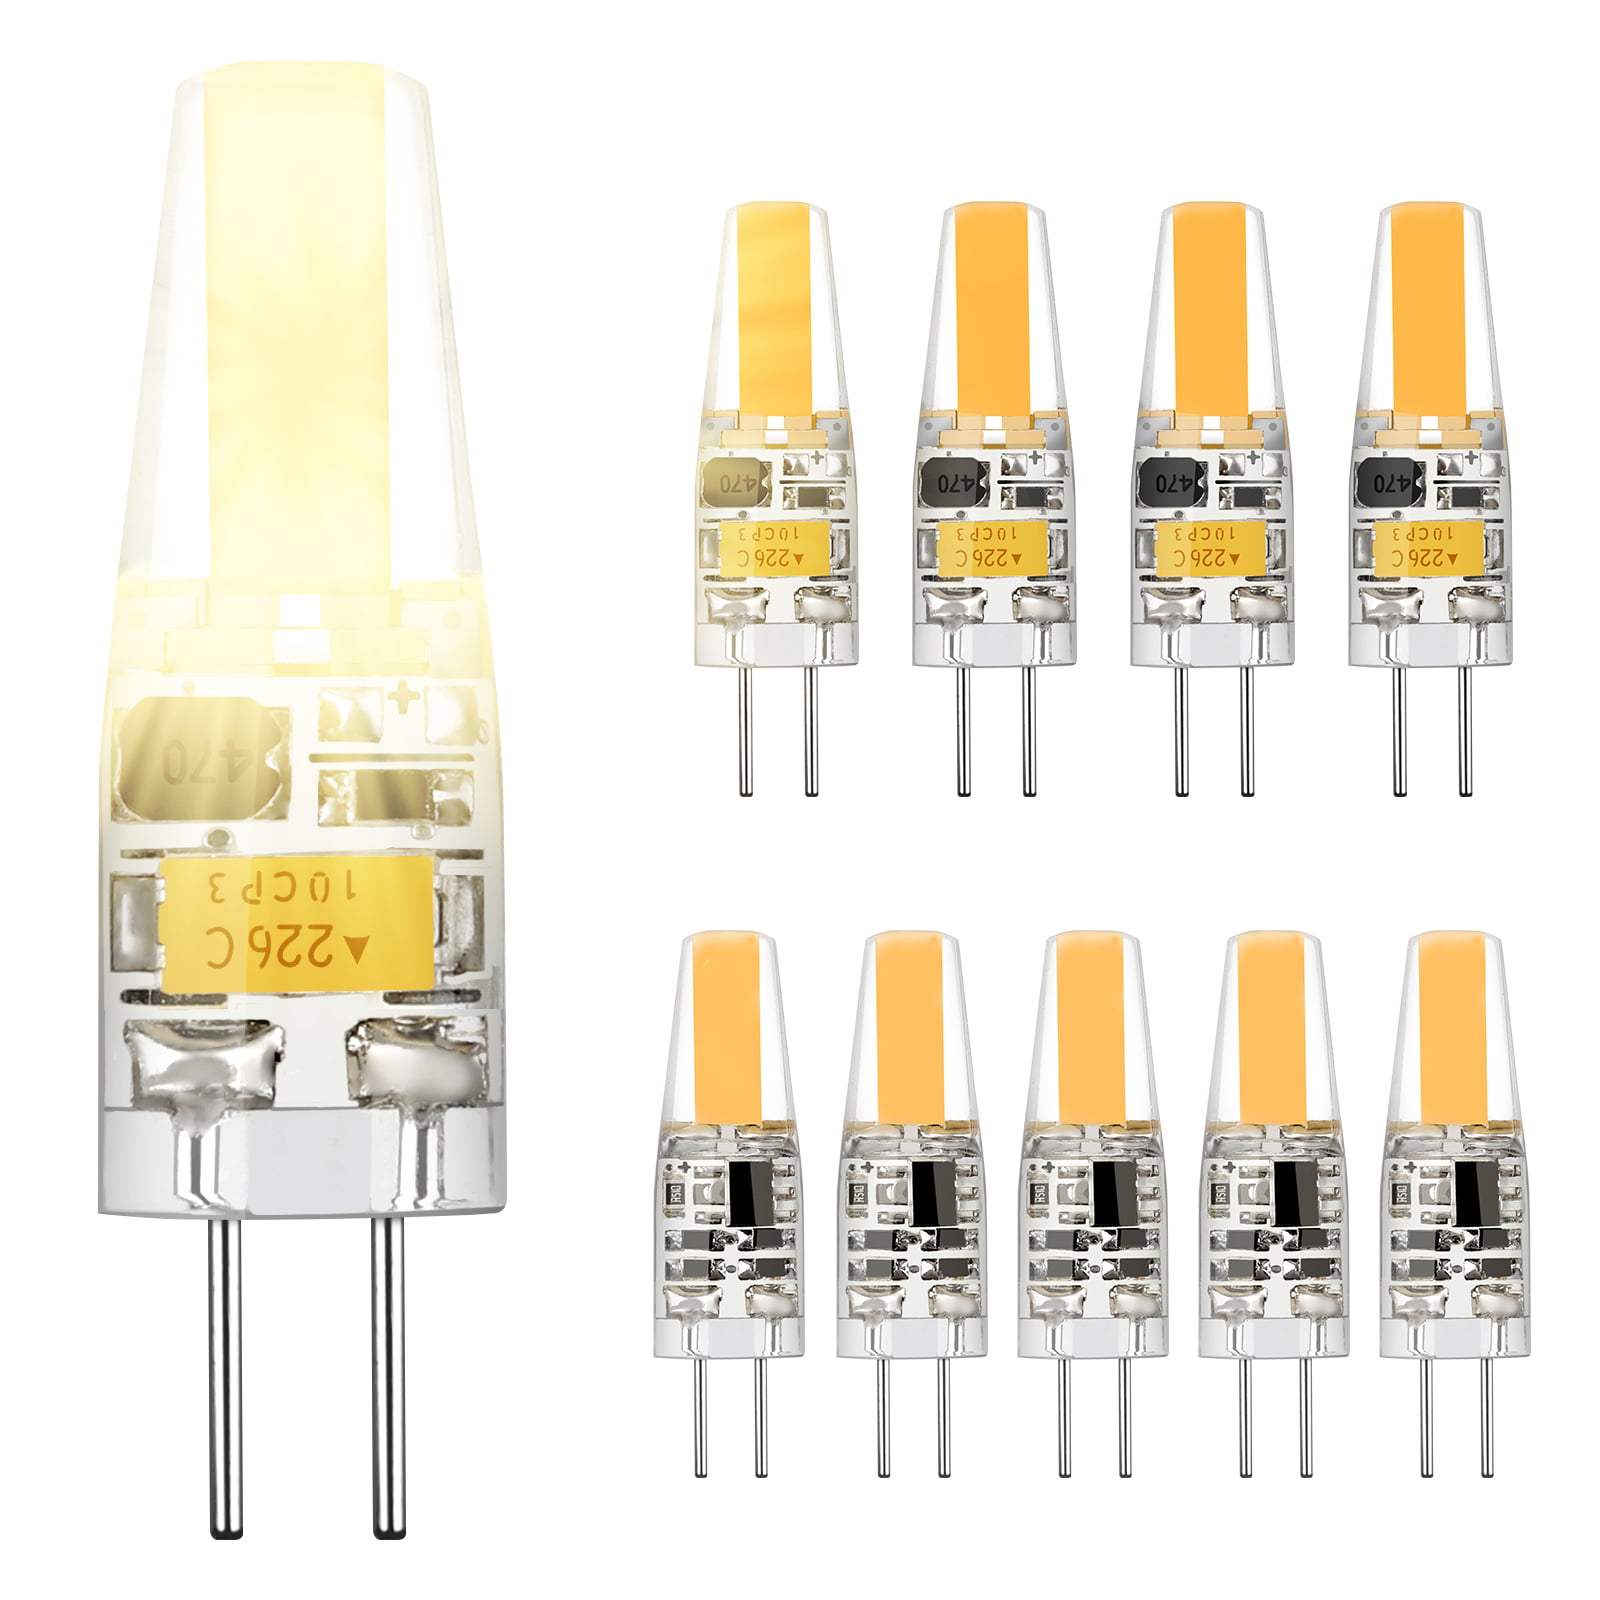 12V 20W Replacement Halogen Light Bulb Lamp Bi-Pin G4 10pcs Warm White 